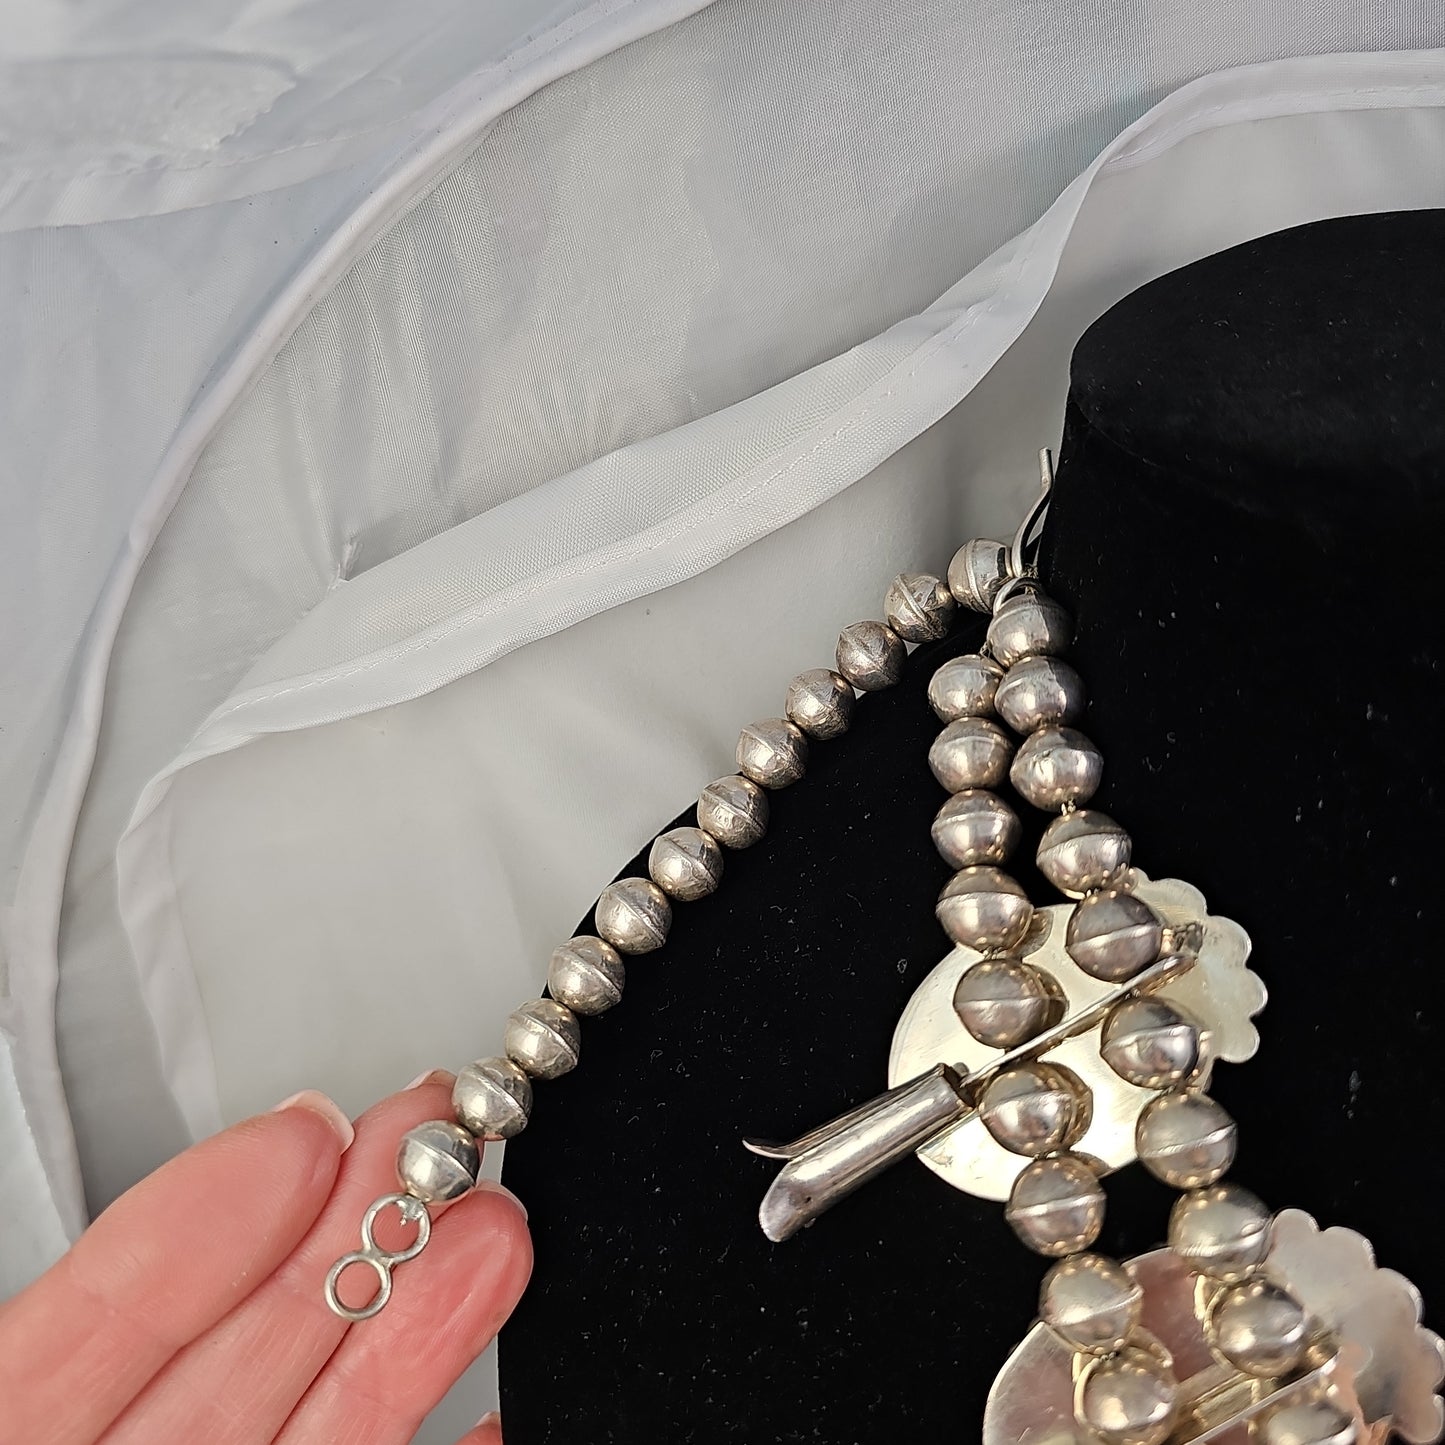 Large Squash blossom necklace with matching 3 stone bracelet